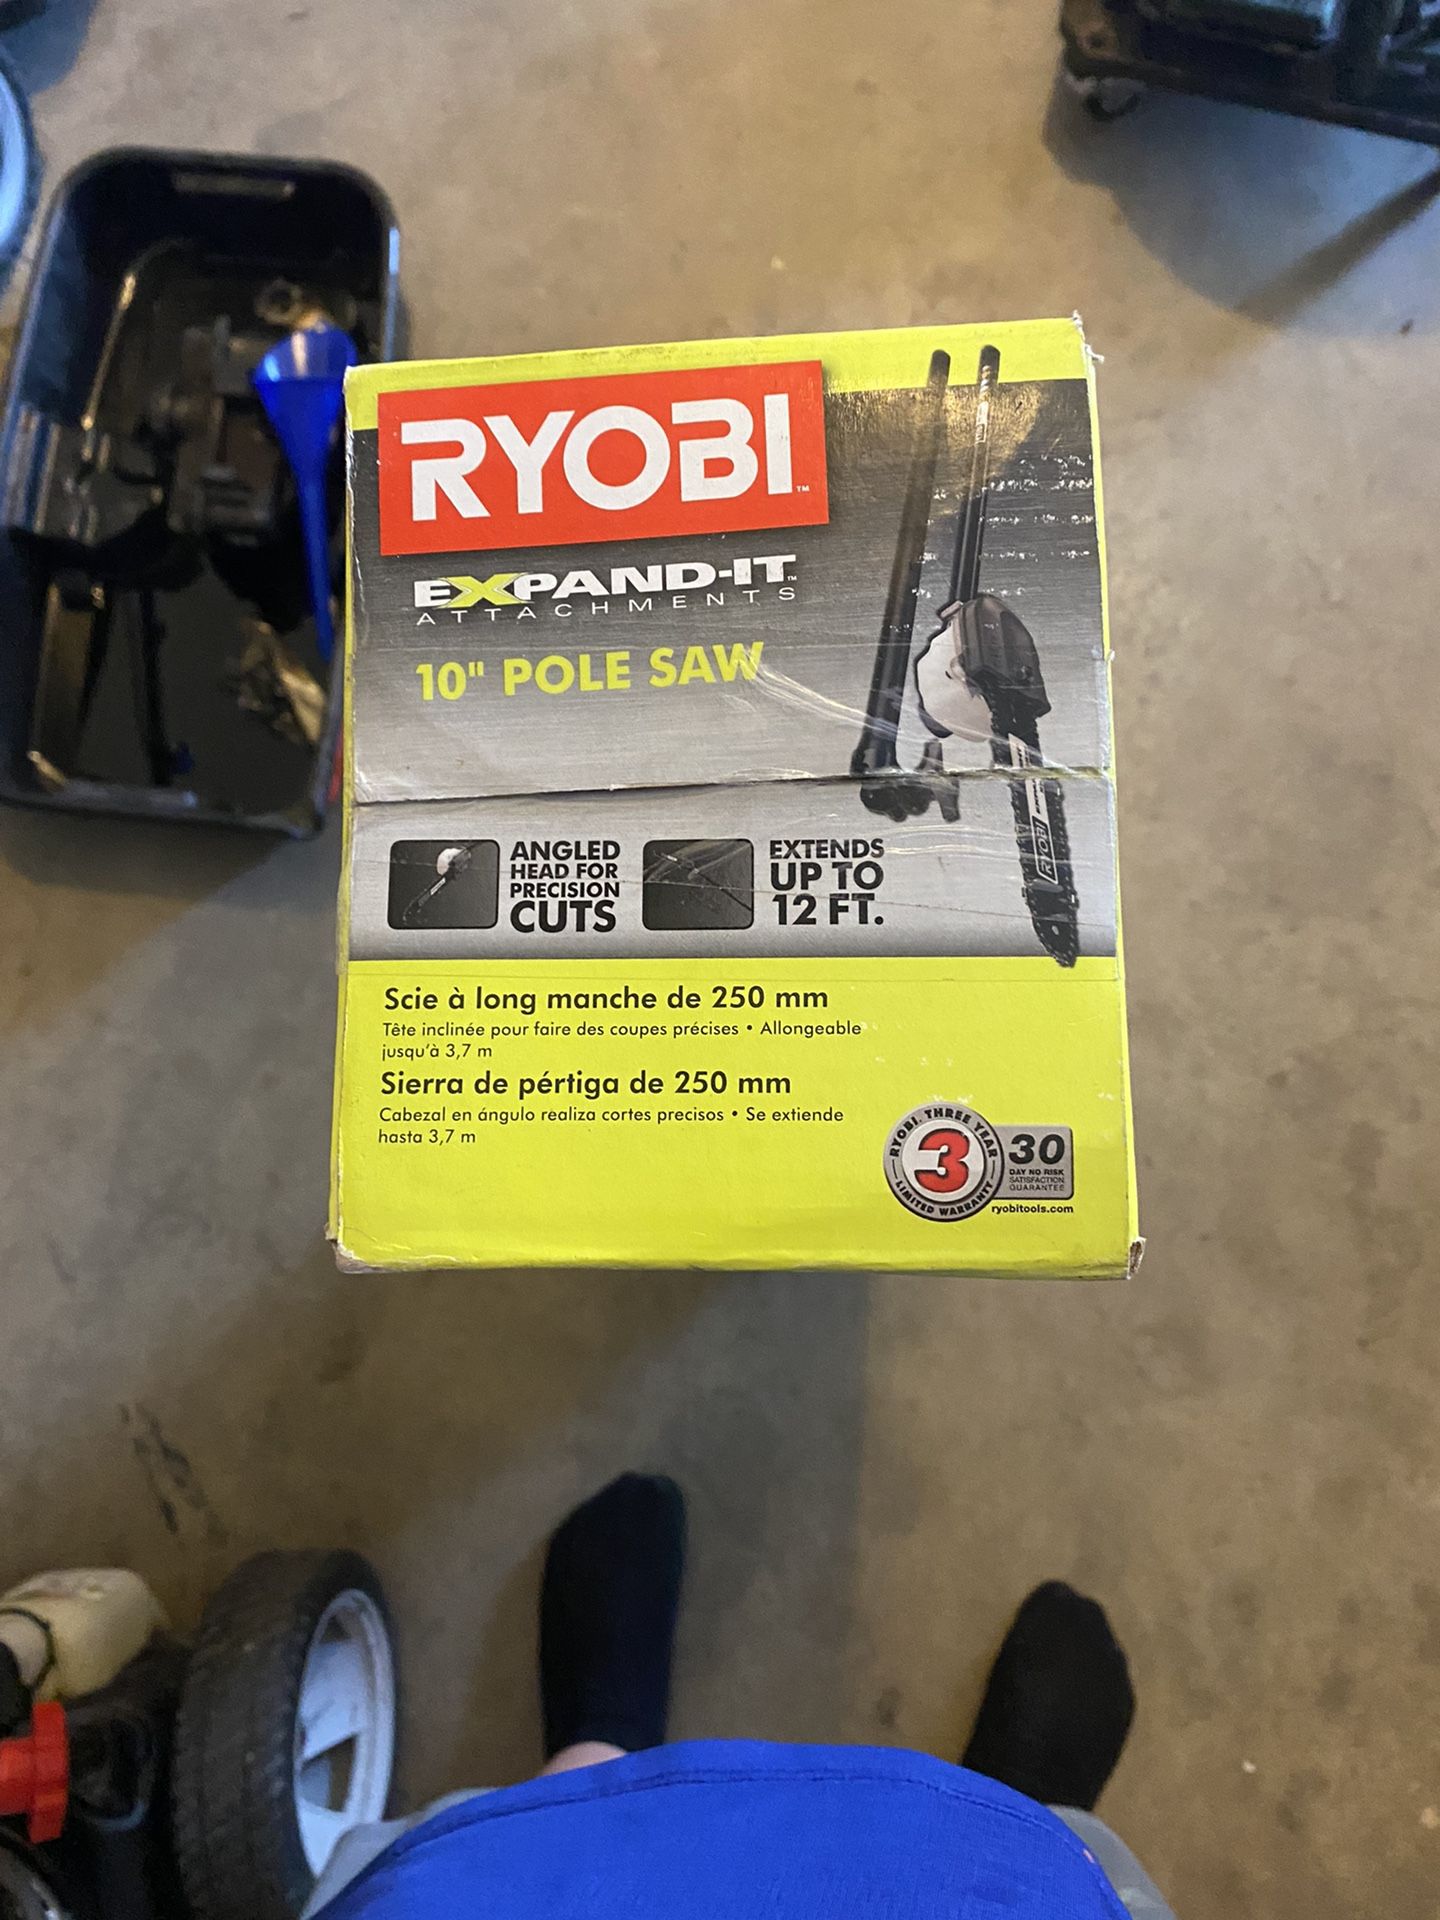 Ryobi 10” Expended pole saw